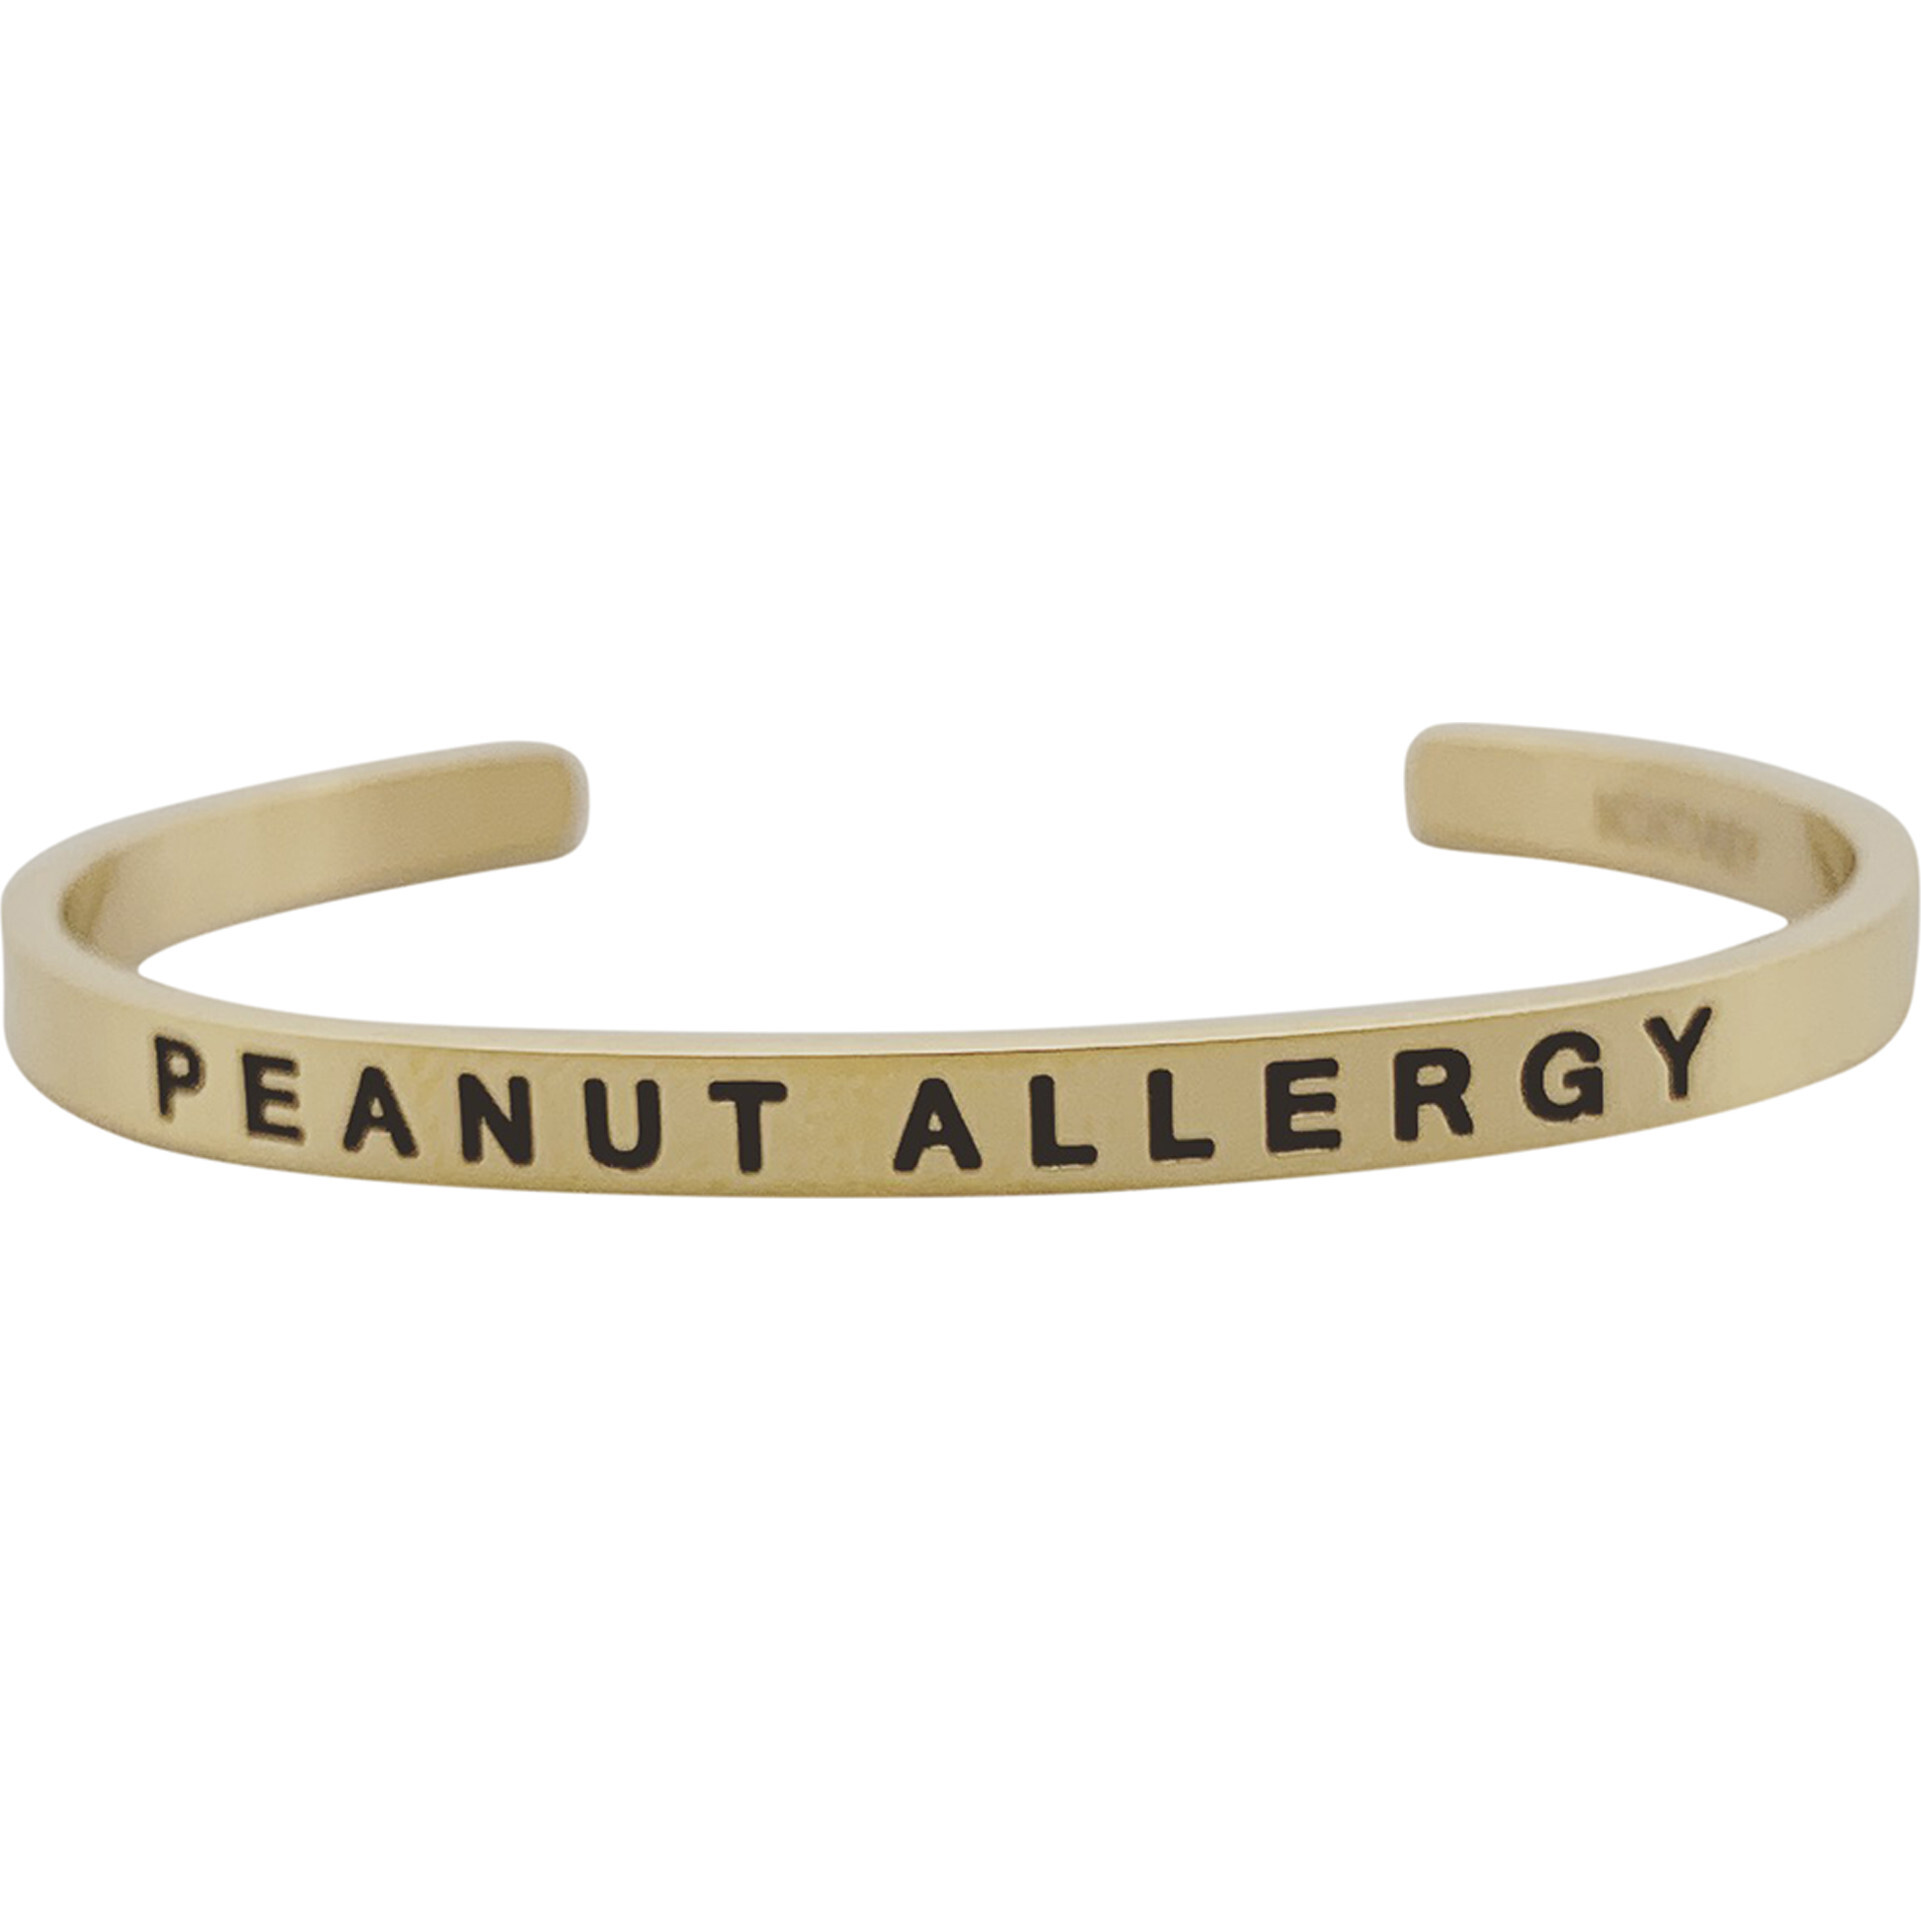 Peanut Allergy Alert Bracelet by AllerMates  Safely Identify Peanut